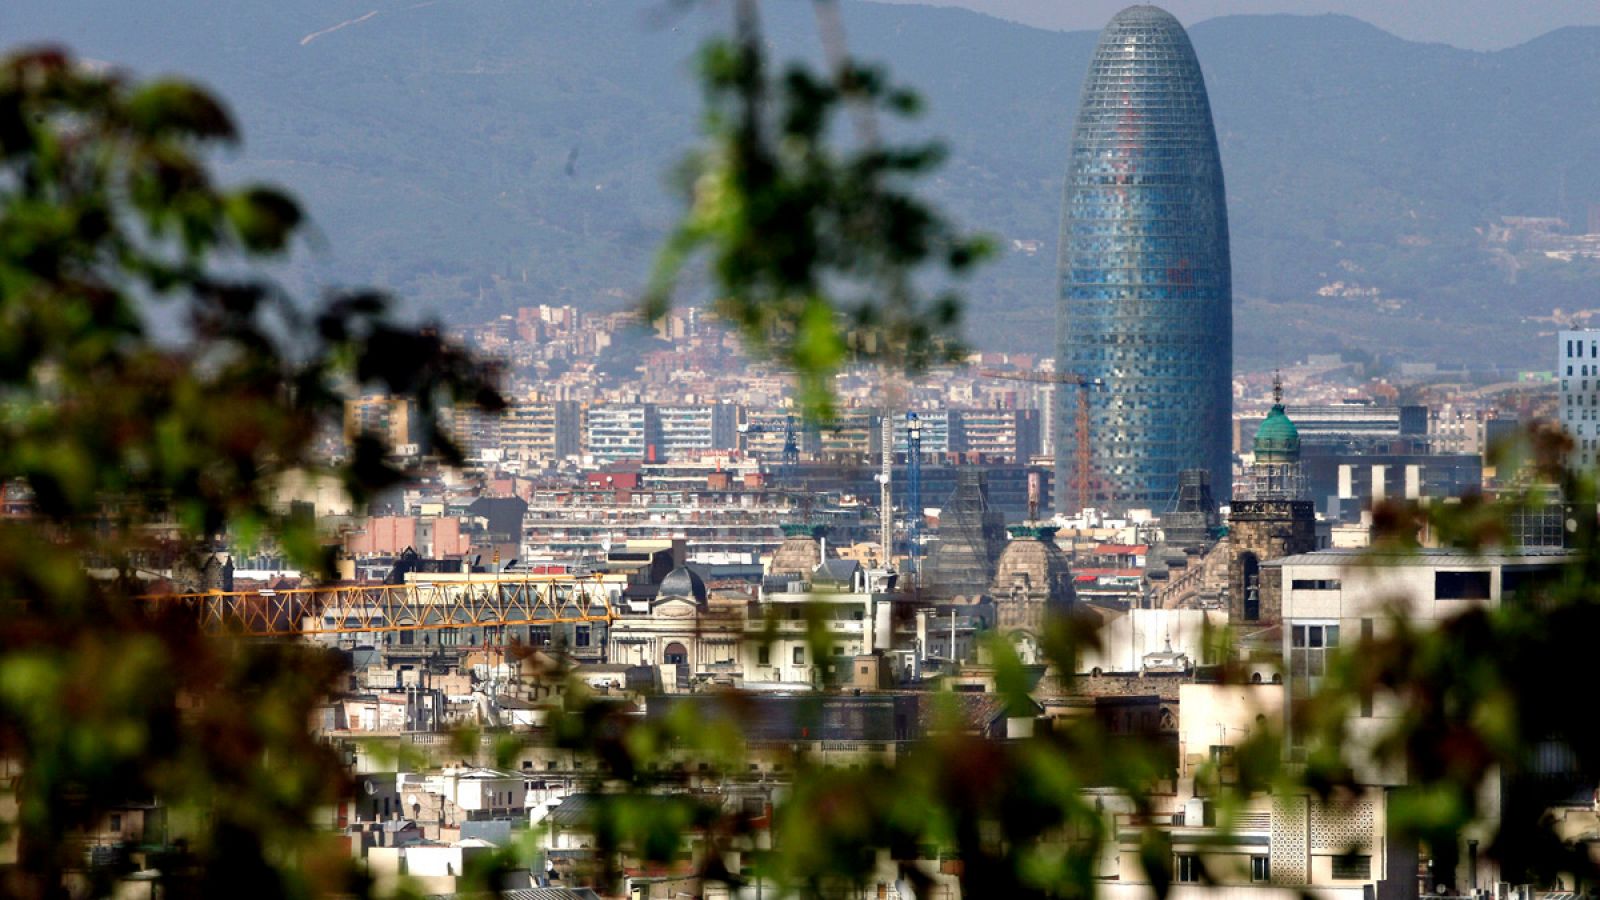 Panoramica de Barcelona con la Torre Agbar al fondo